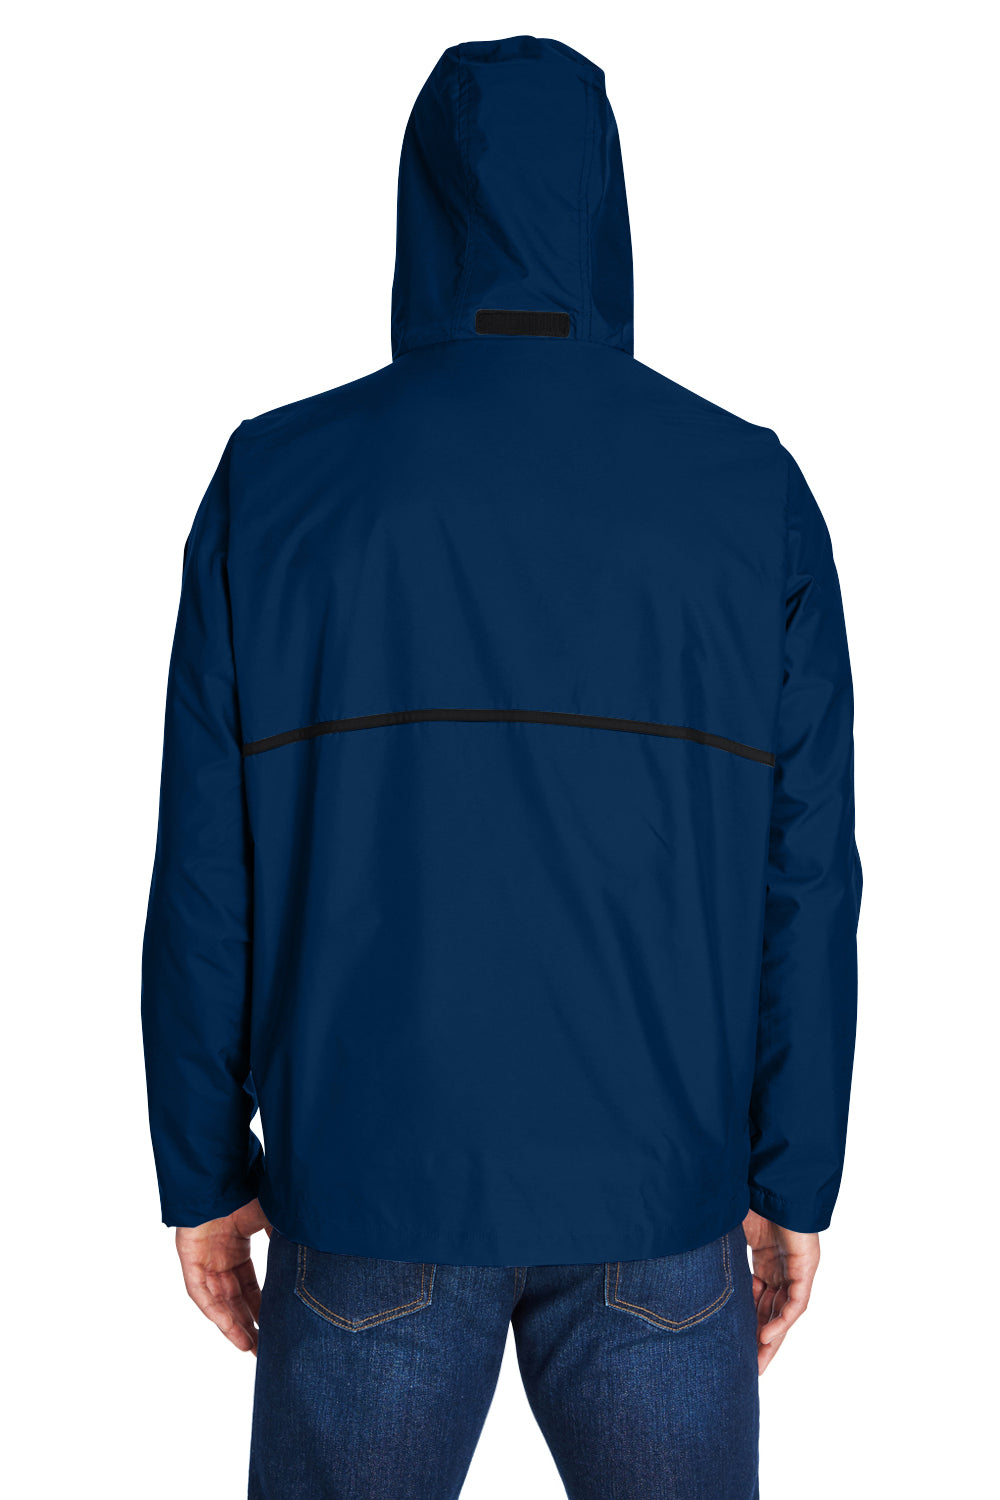 Team 365 TT70 Mens Conquest Wind & Water Resistant Full Zip Hooded Jacket Navy Blue Back